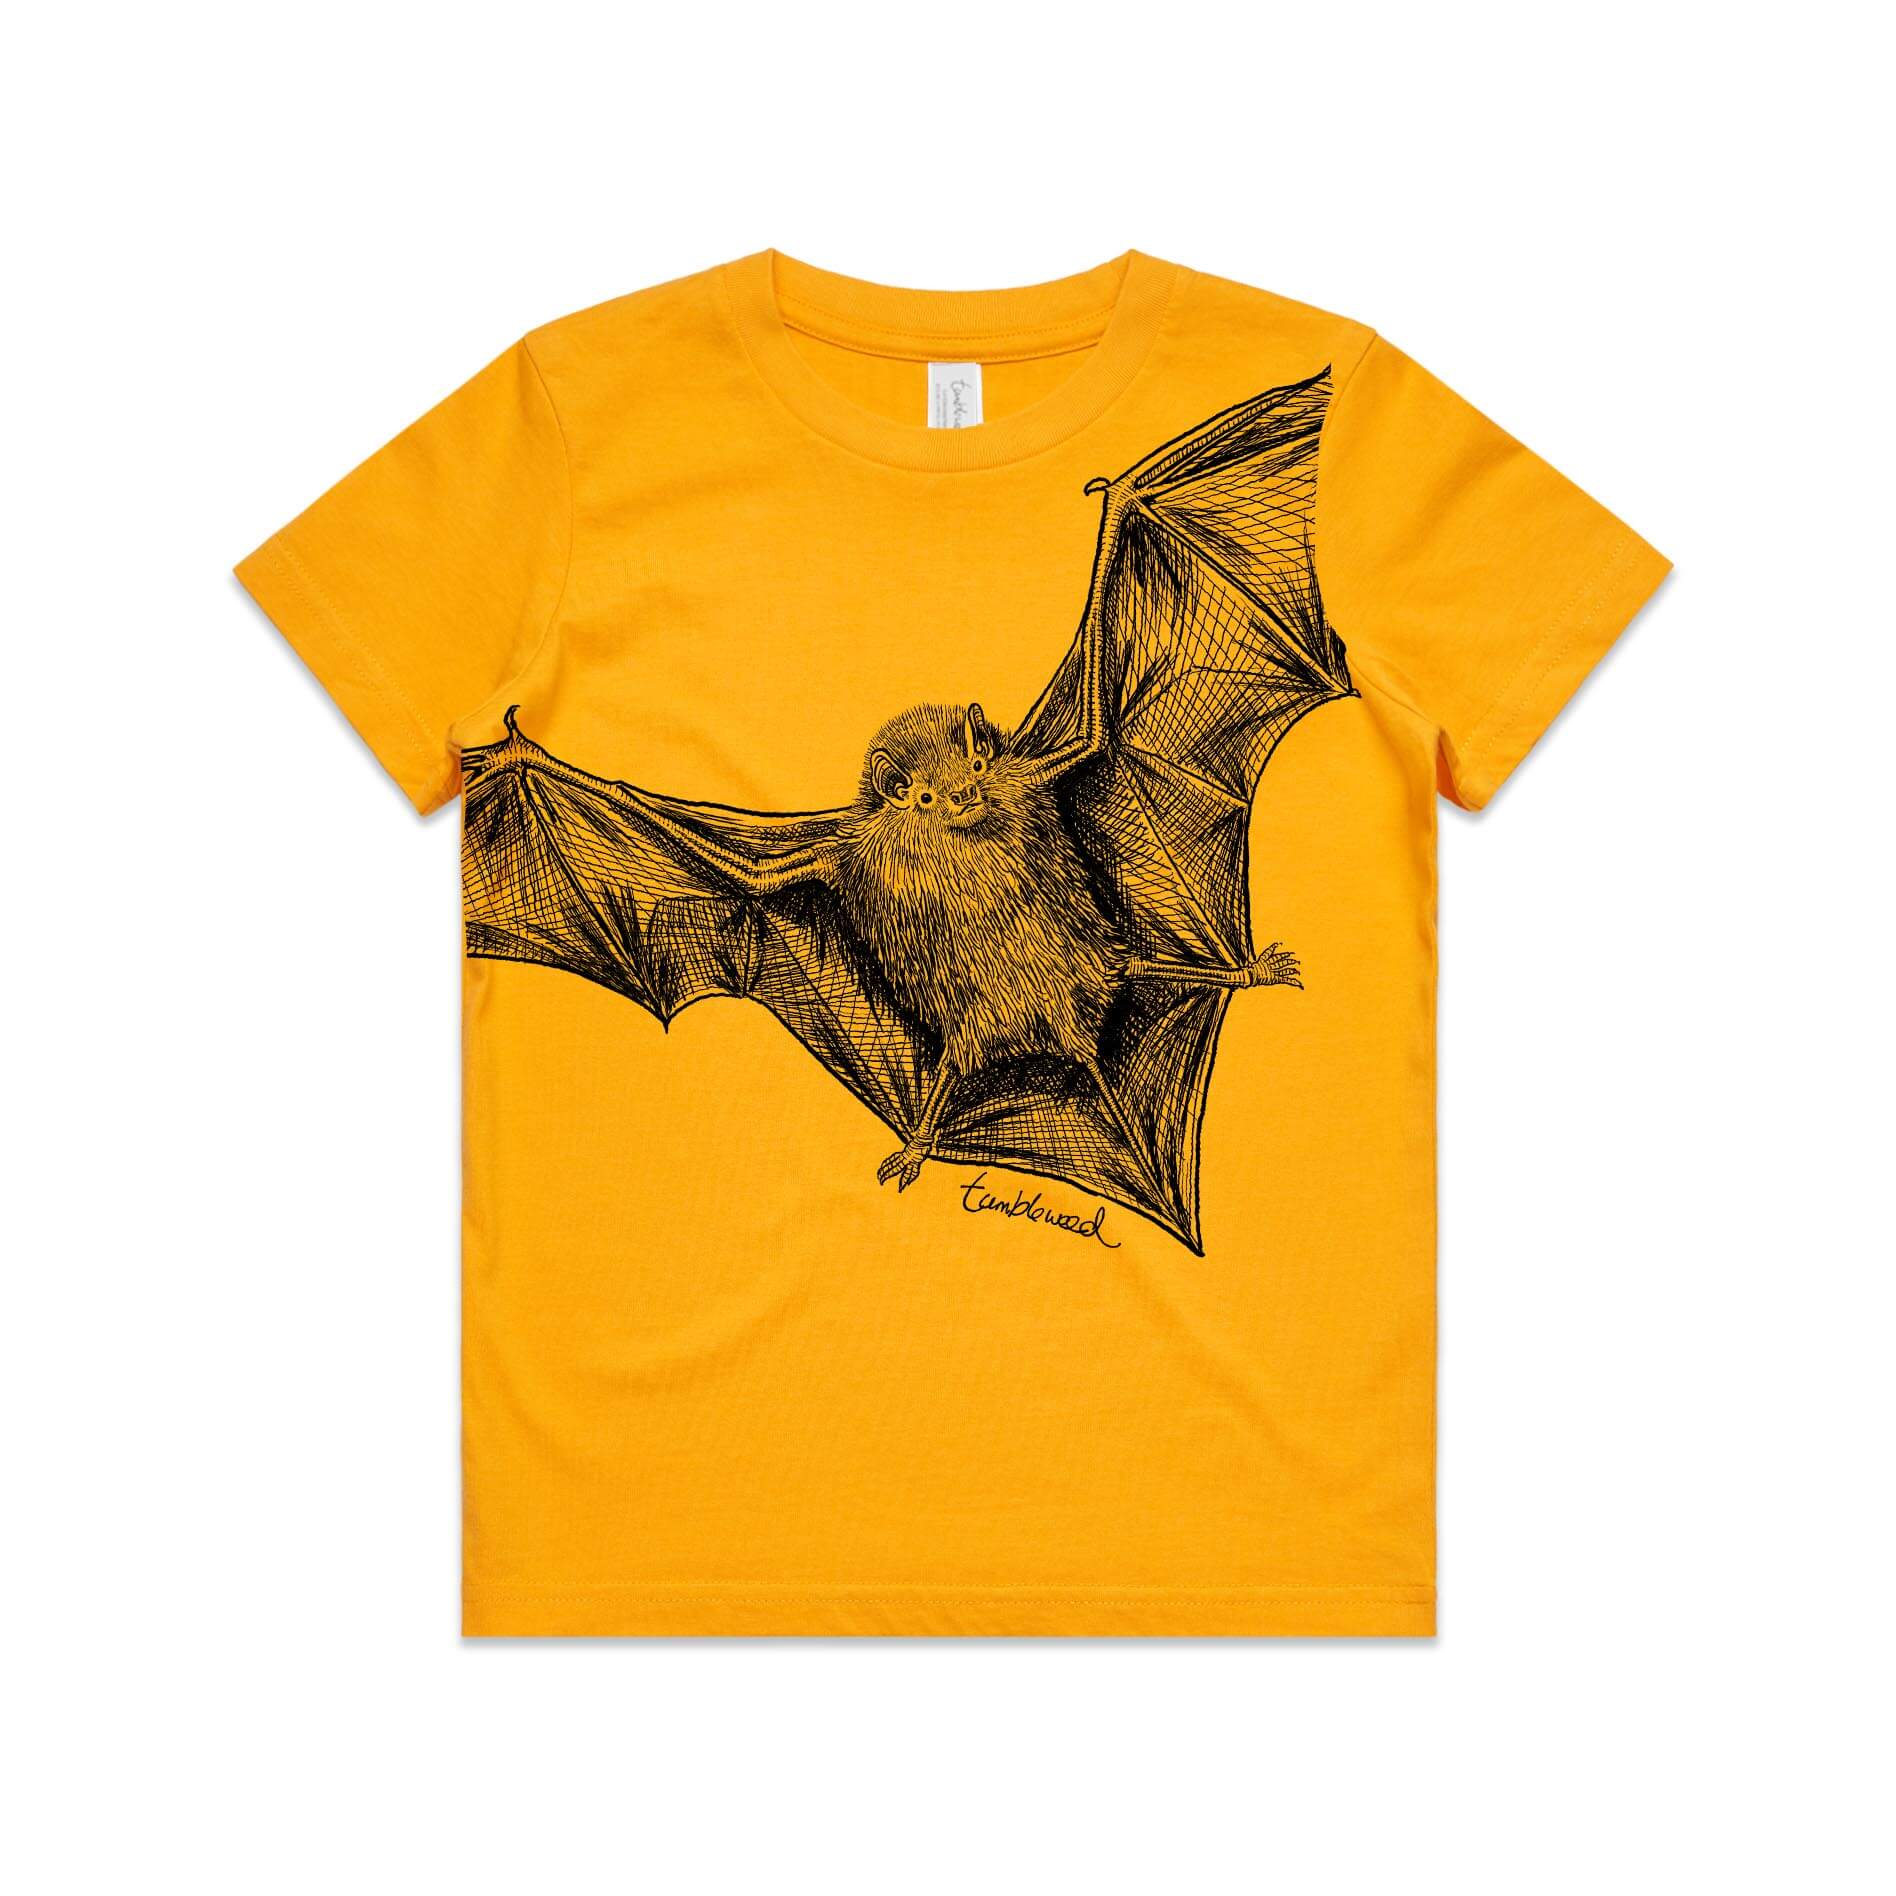 Gold, cotton kids' t-shirt with screen printed Kids bat design.